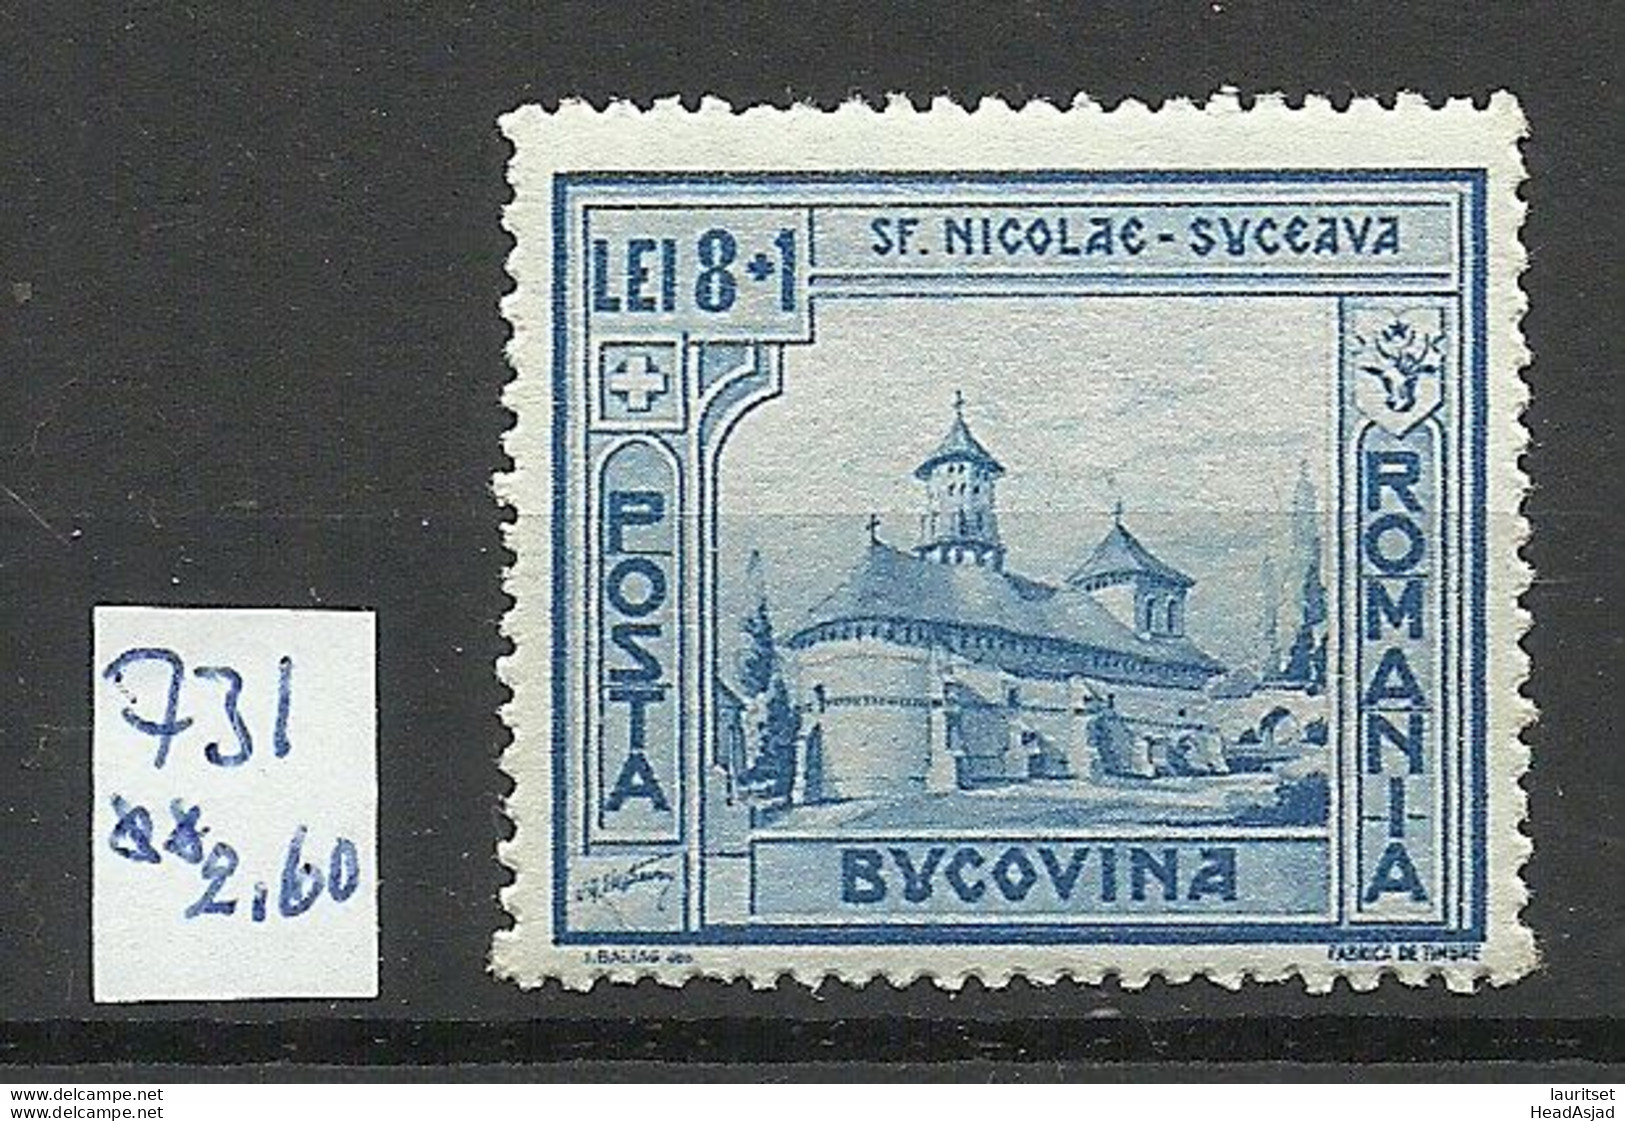 ROMANIA Rumänien 1941 Michel 738 Bucovina Arcitecture MNH - Ungebraucht